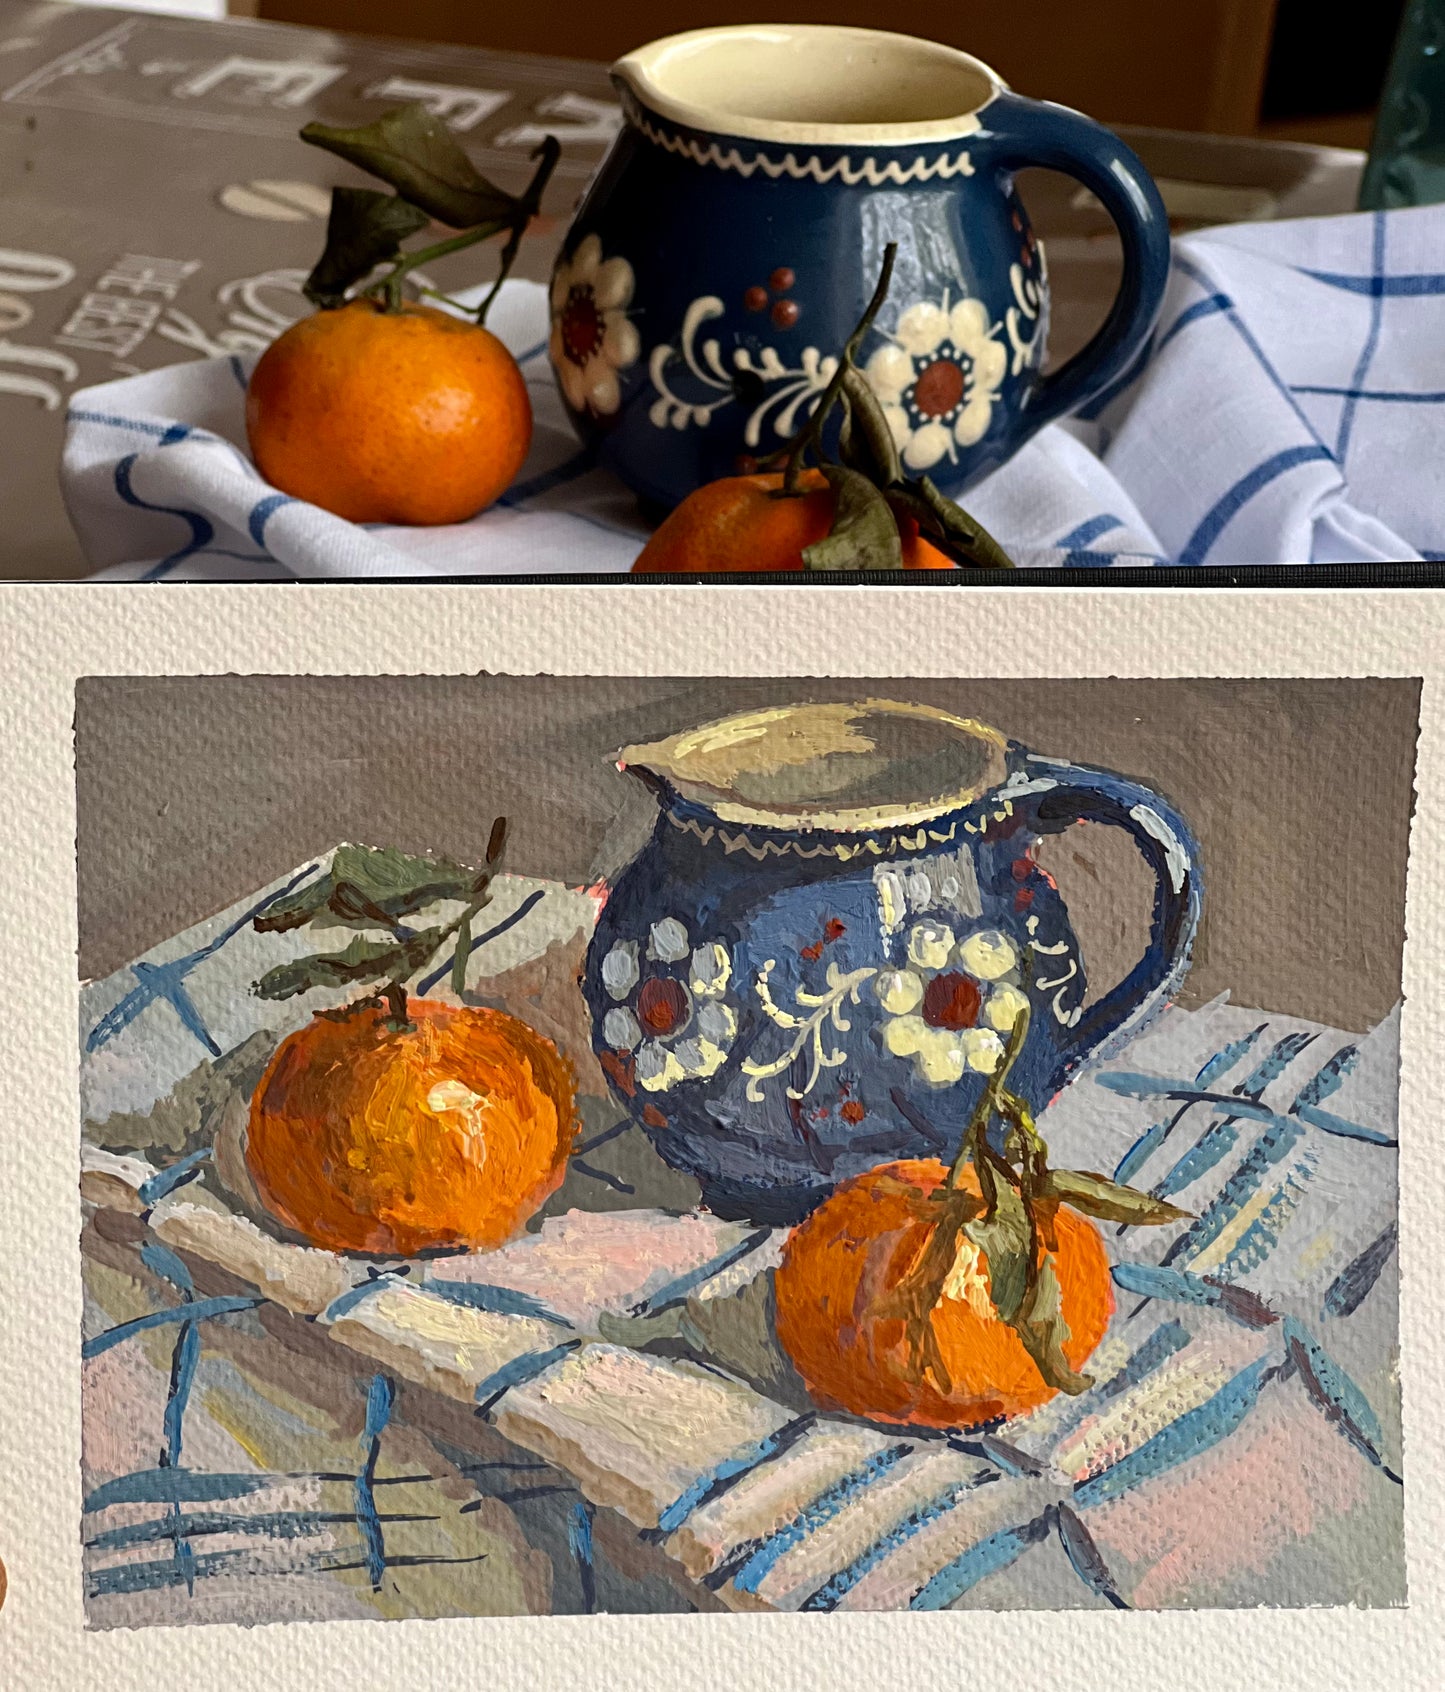 Gouache Painting - Oranges with Blue Jar!